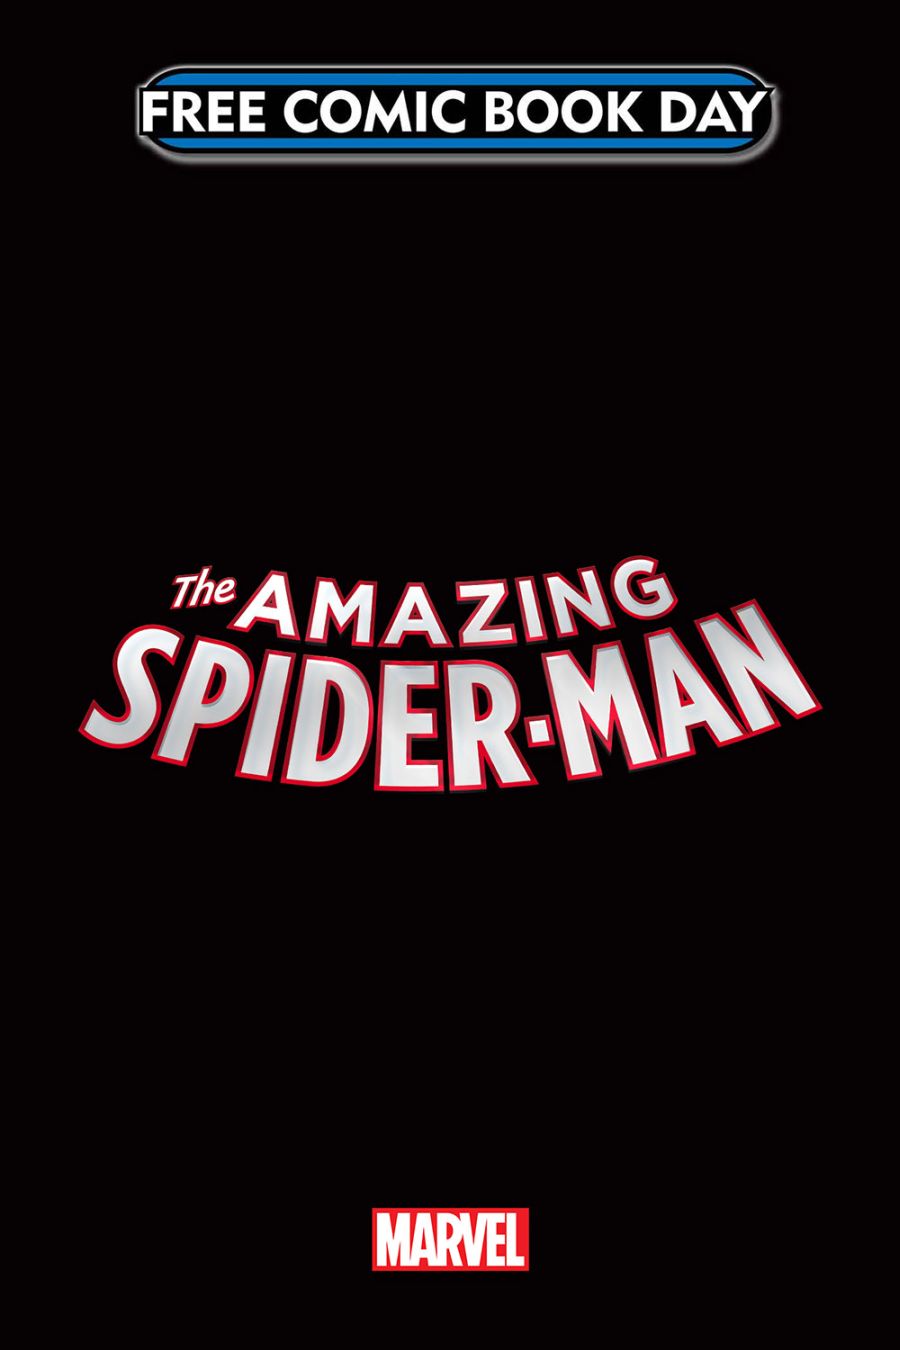 Marvel Comics | INFINITY WATCH & AMAZING SPIDER-MAN 